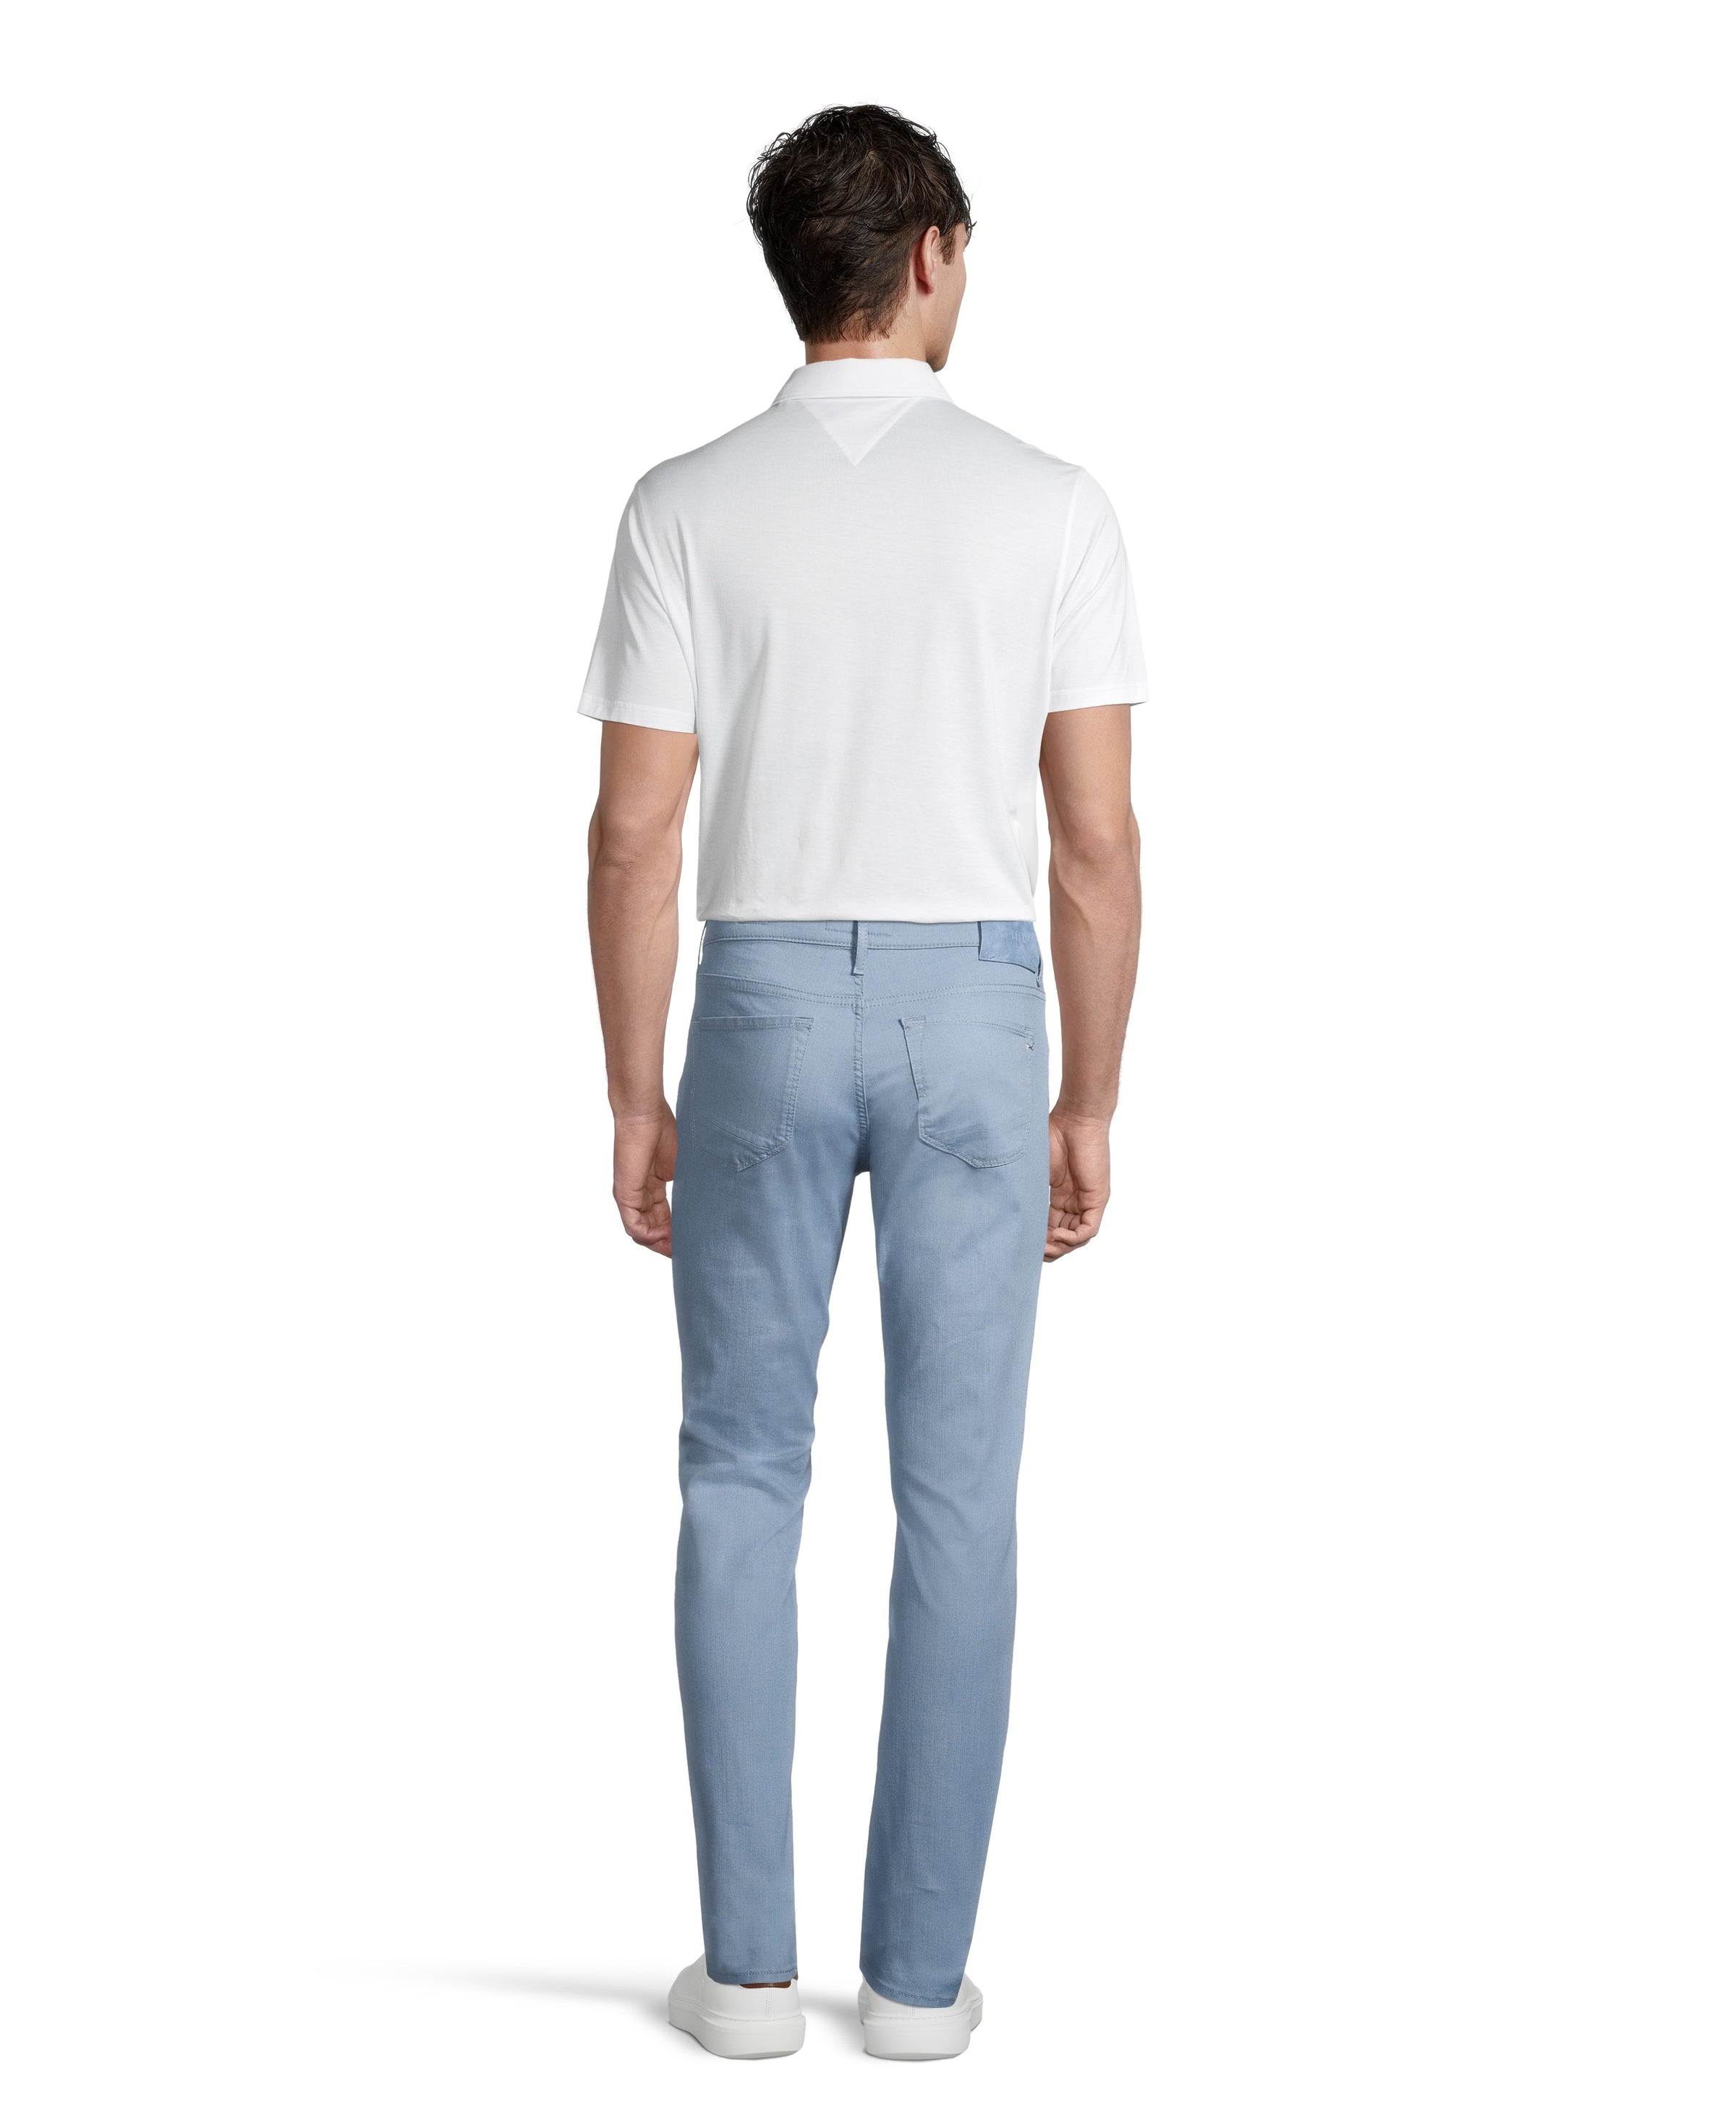 Chuck BRAX Stretch Pocket Hi-Flex Modern – Company Pants 5 Seattle Thread Fit